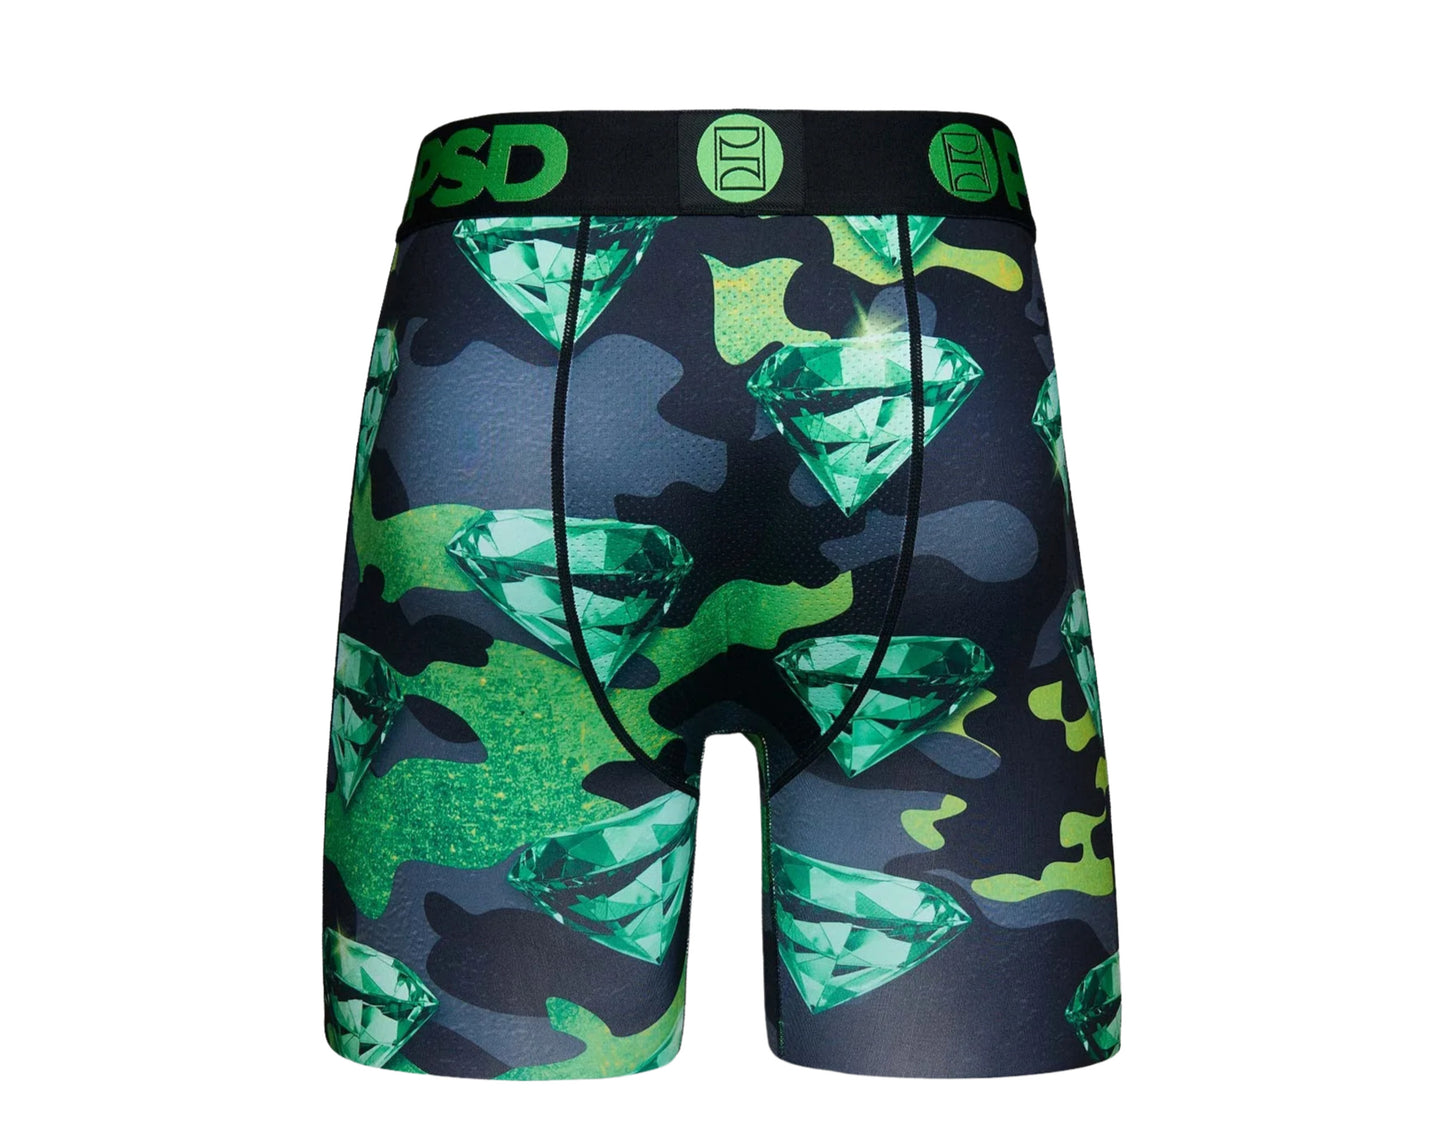 PSD Warface Emerald Camo Boxer Briefs Men's Underwear